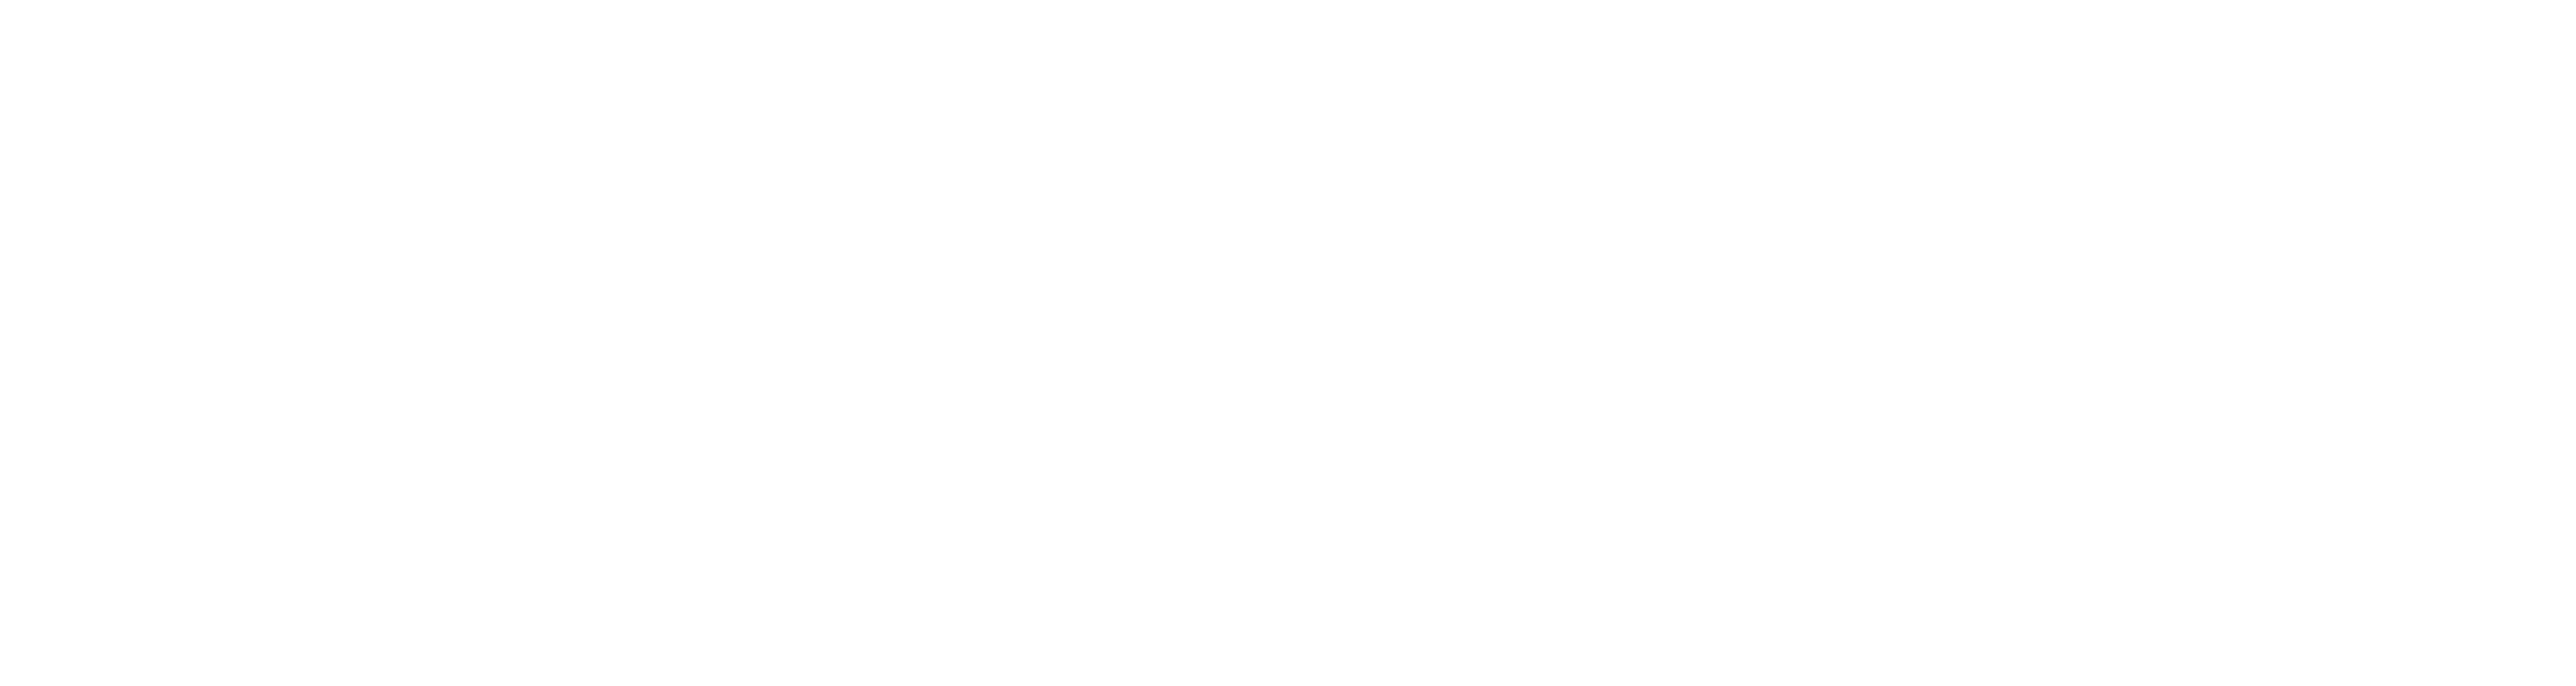 Biomea Fusion - Menin.org